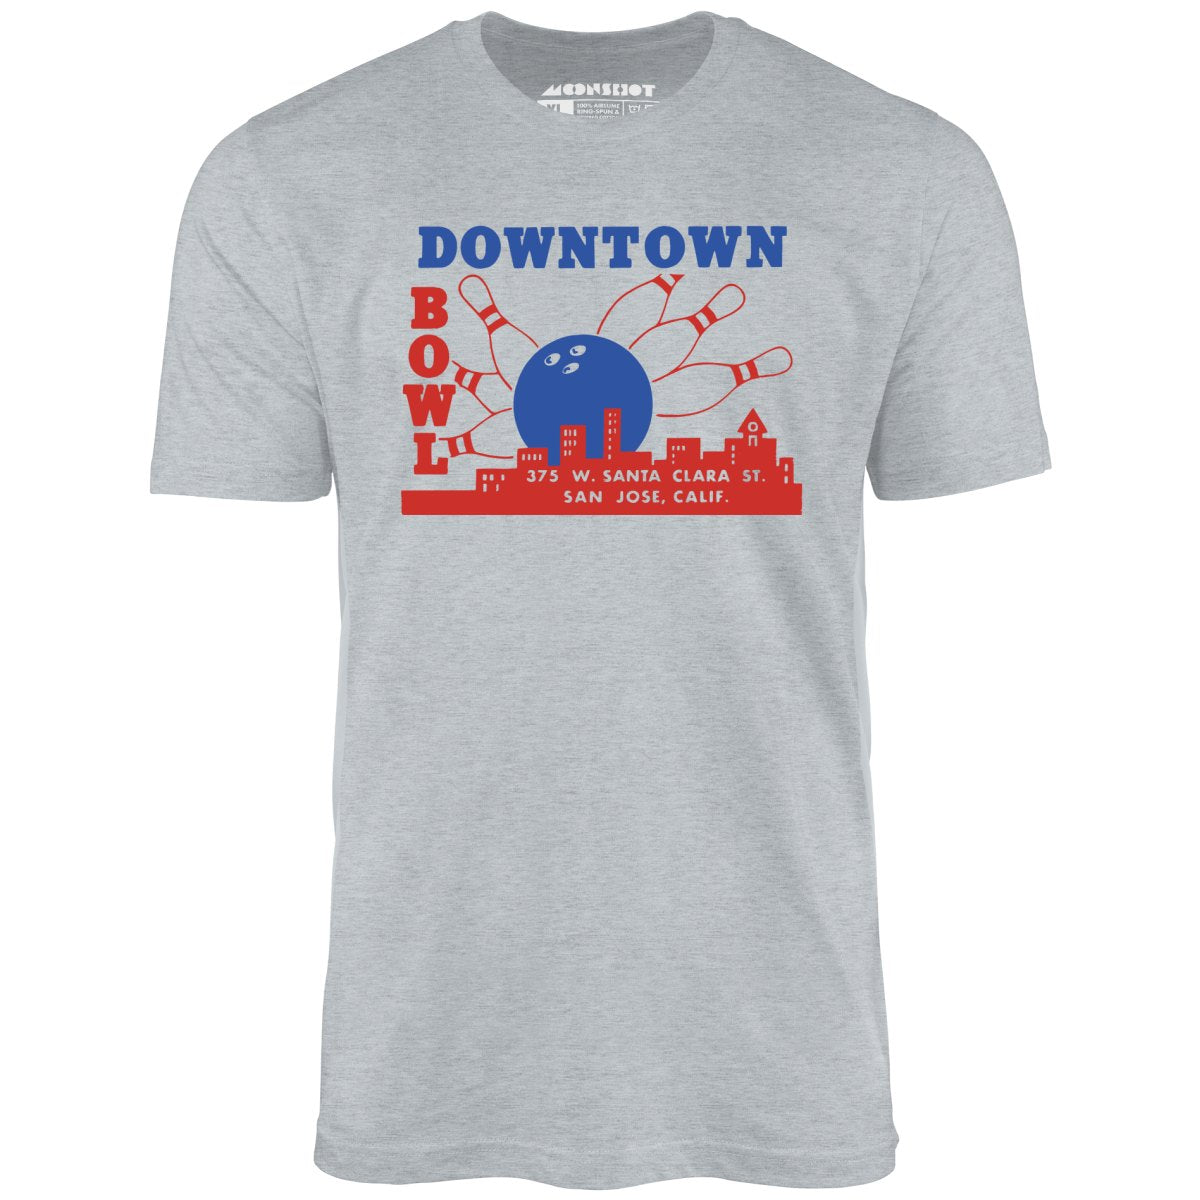 Downtown Bowl - San Jose, CA - Vintage Bowling Alley - Unisex T-Shirt